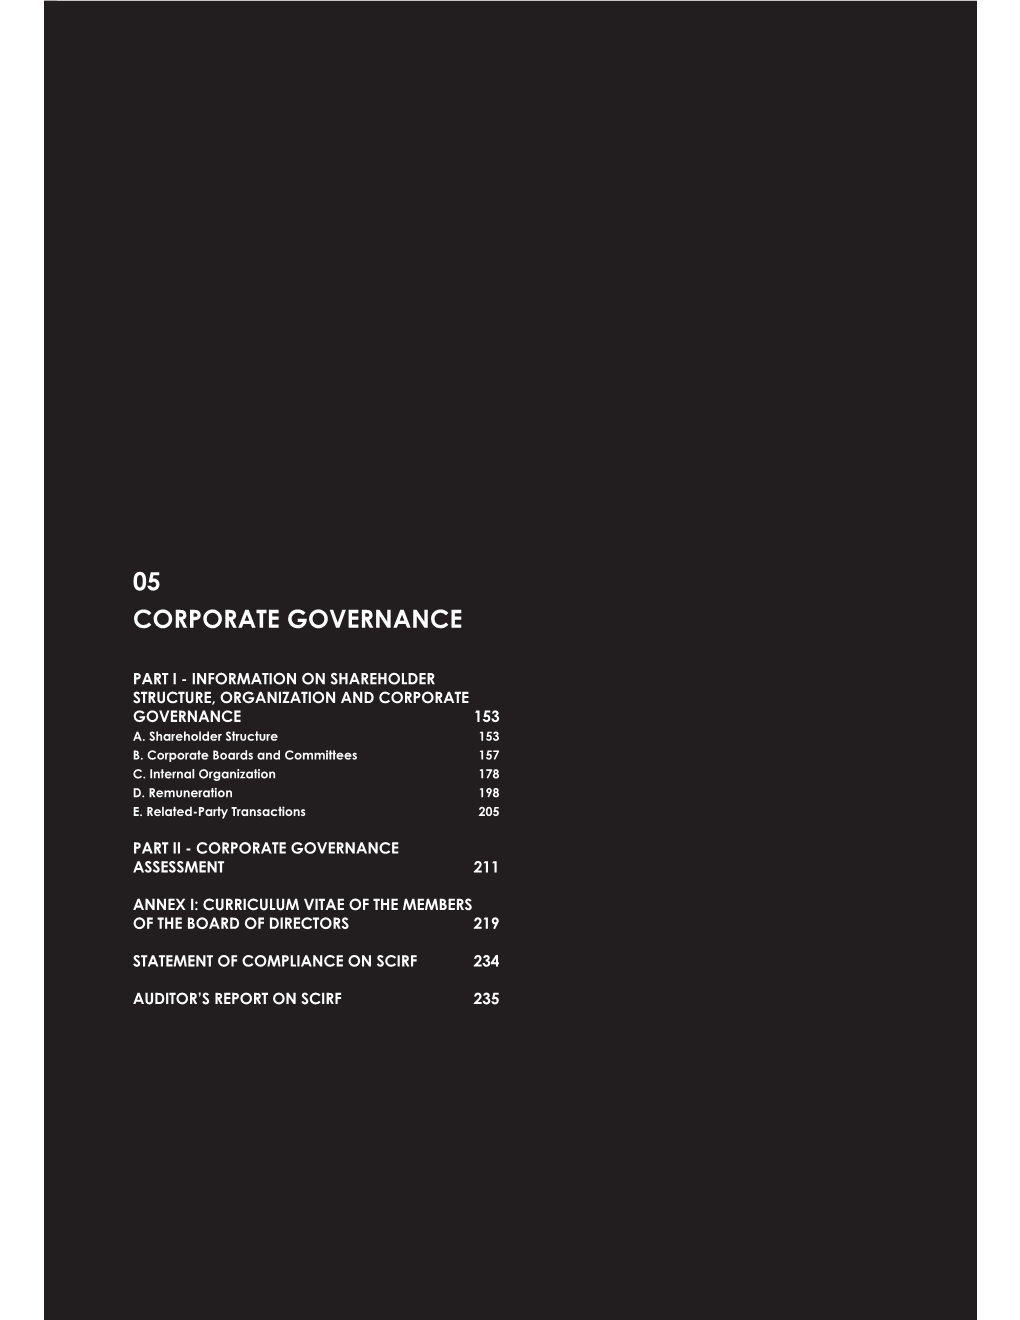 Annualreport2018 05 Corporate Governance